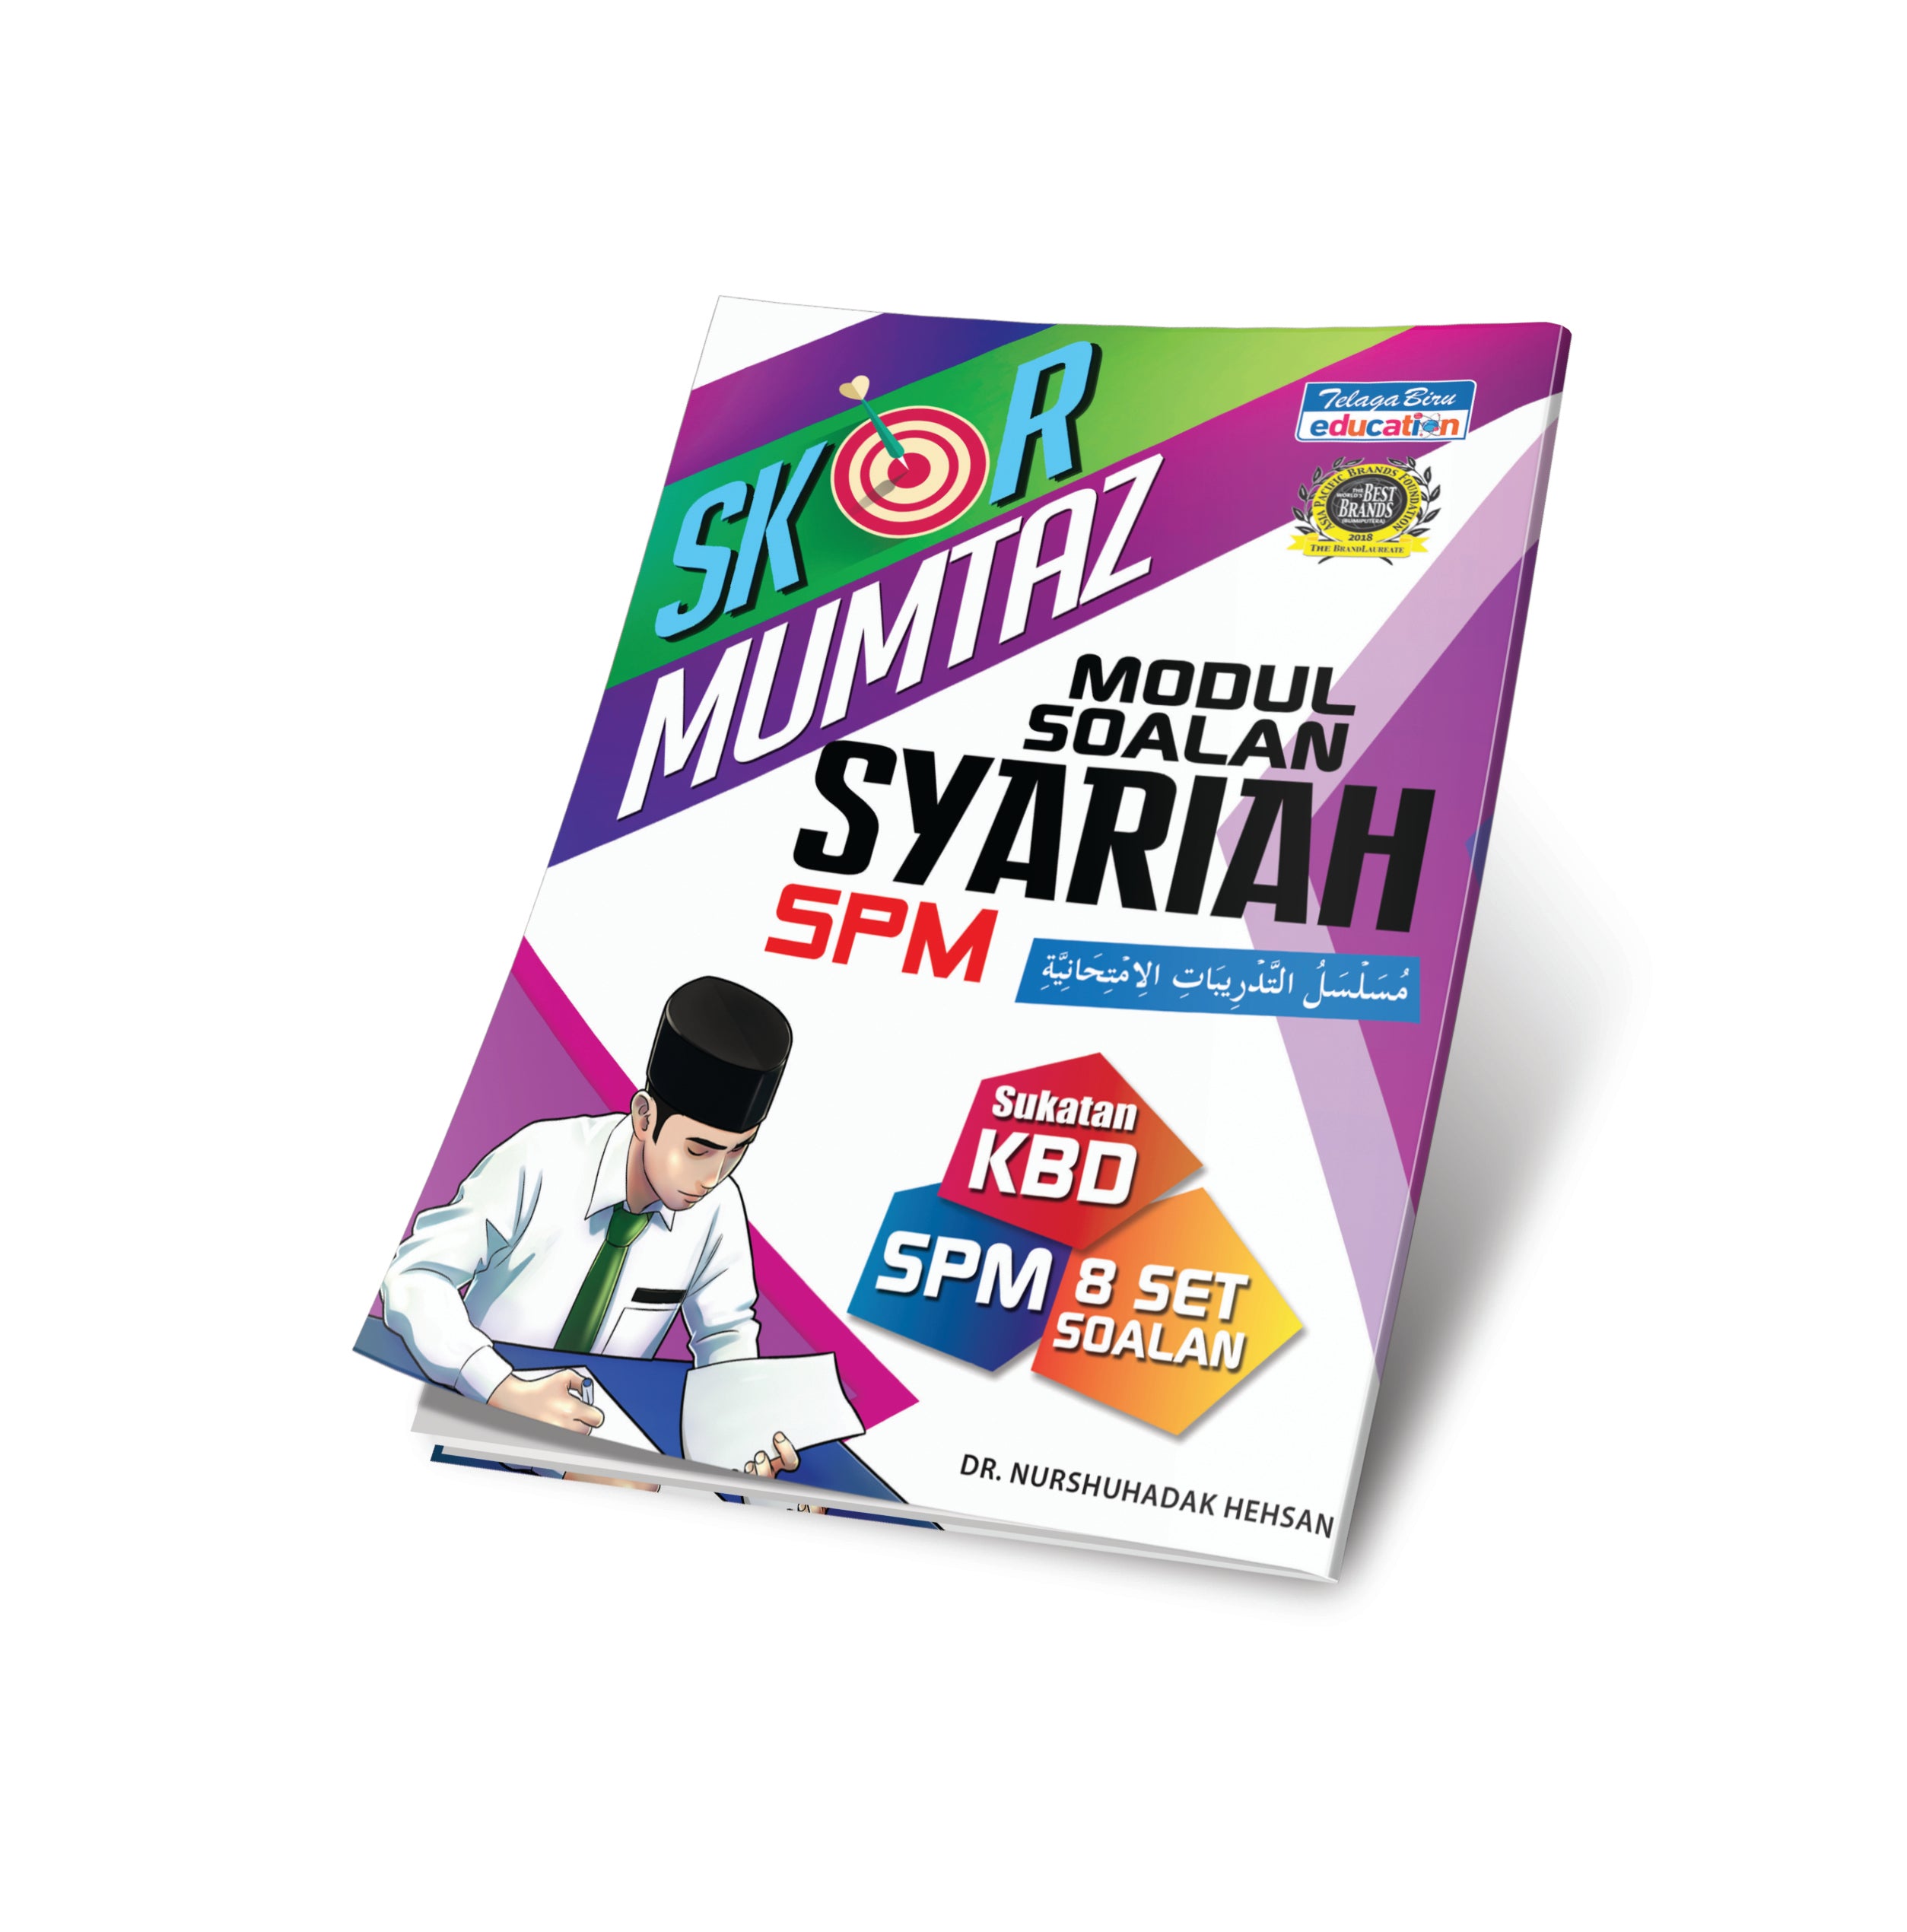 Skor Mumtaz - Modul Soalan Syariah SPM - (TBBS1226)